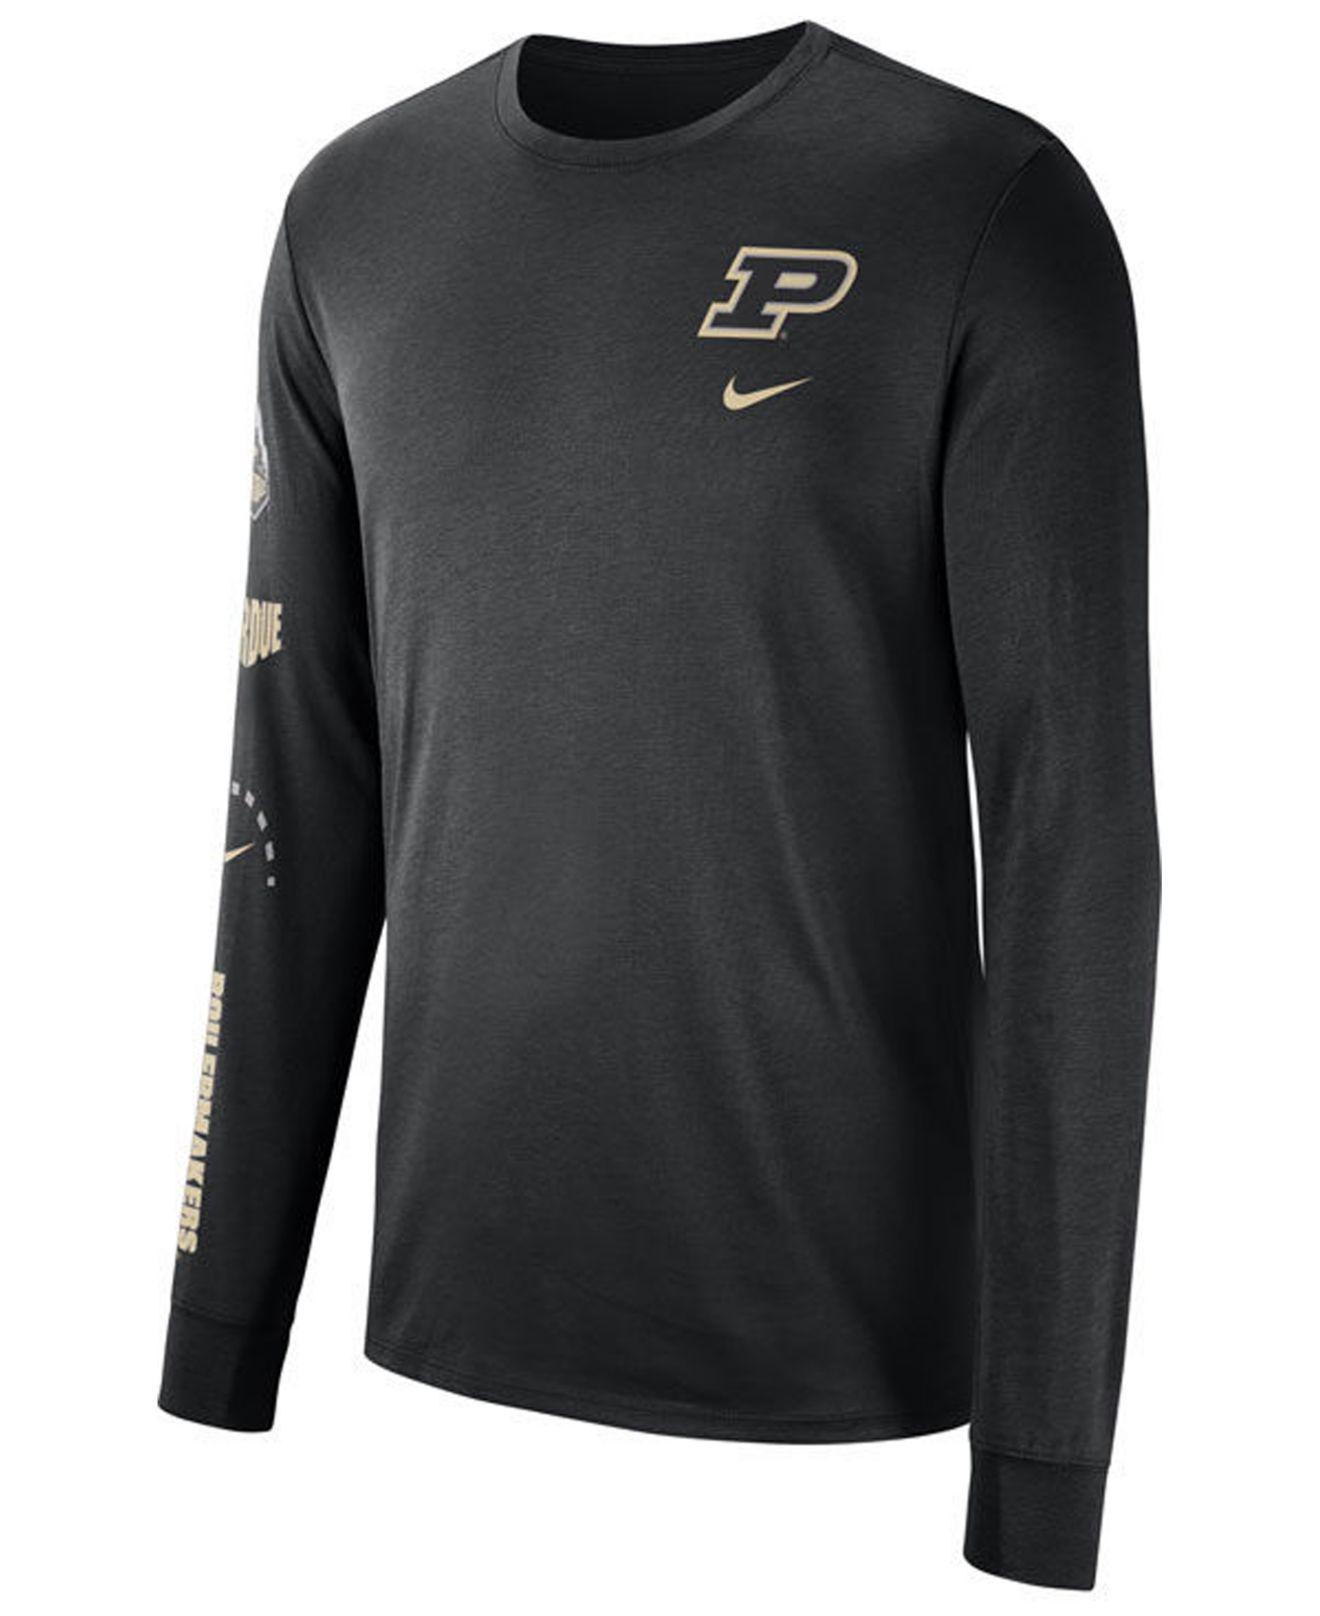 Lyst - Nike Purdue Boilermakers Long Sleeve Basketball T-shirt in Black ...